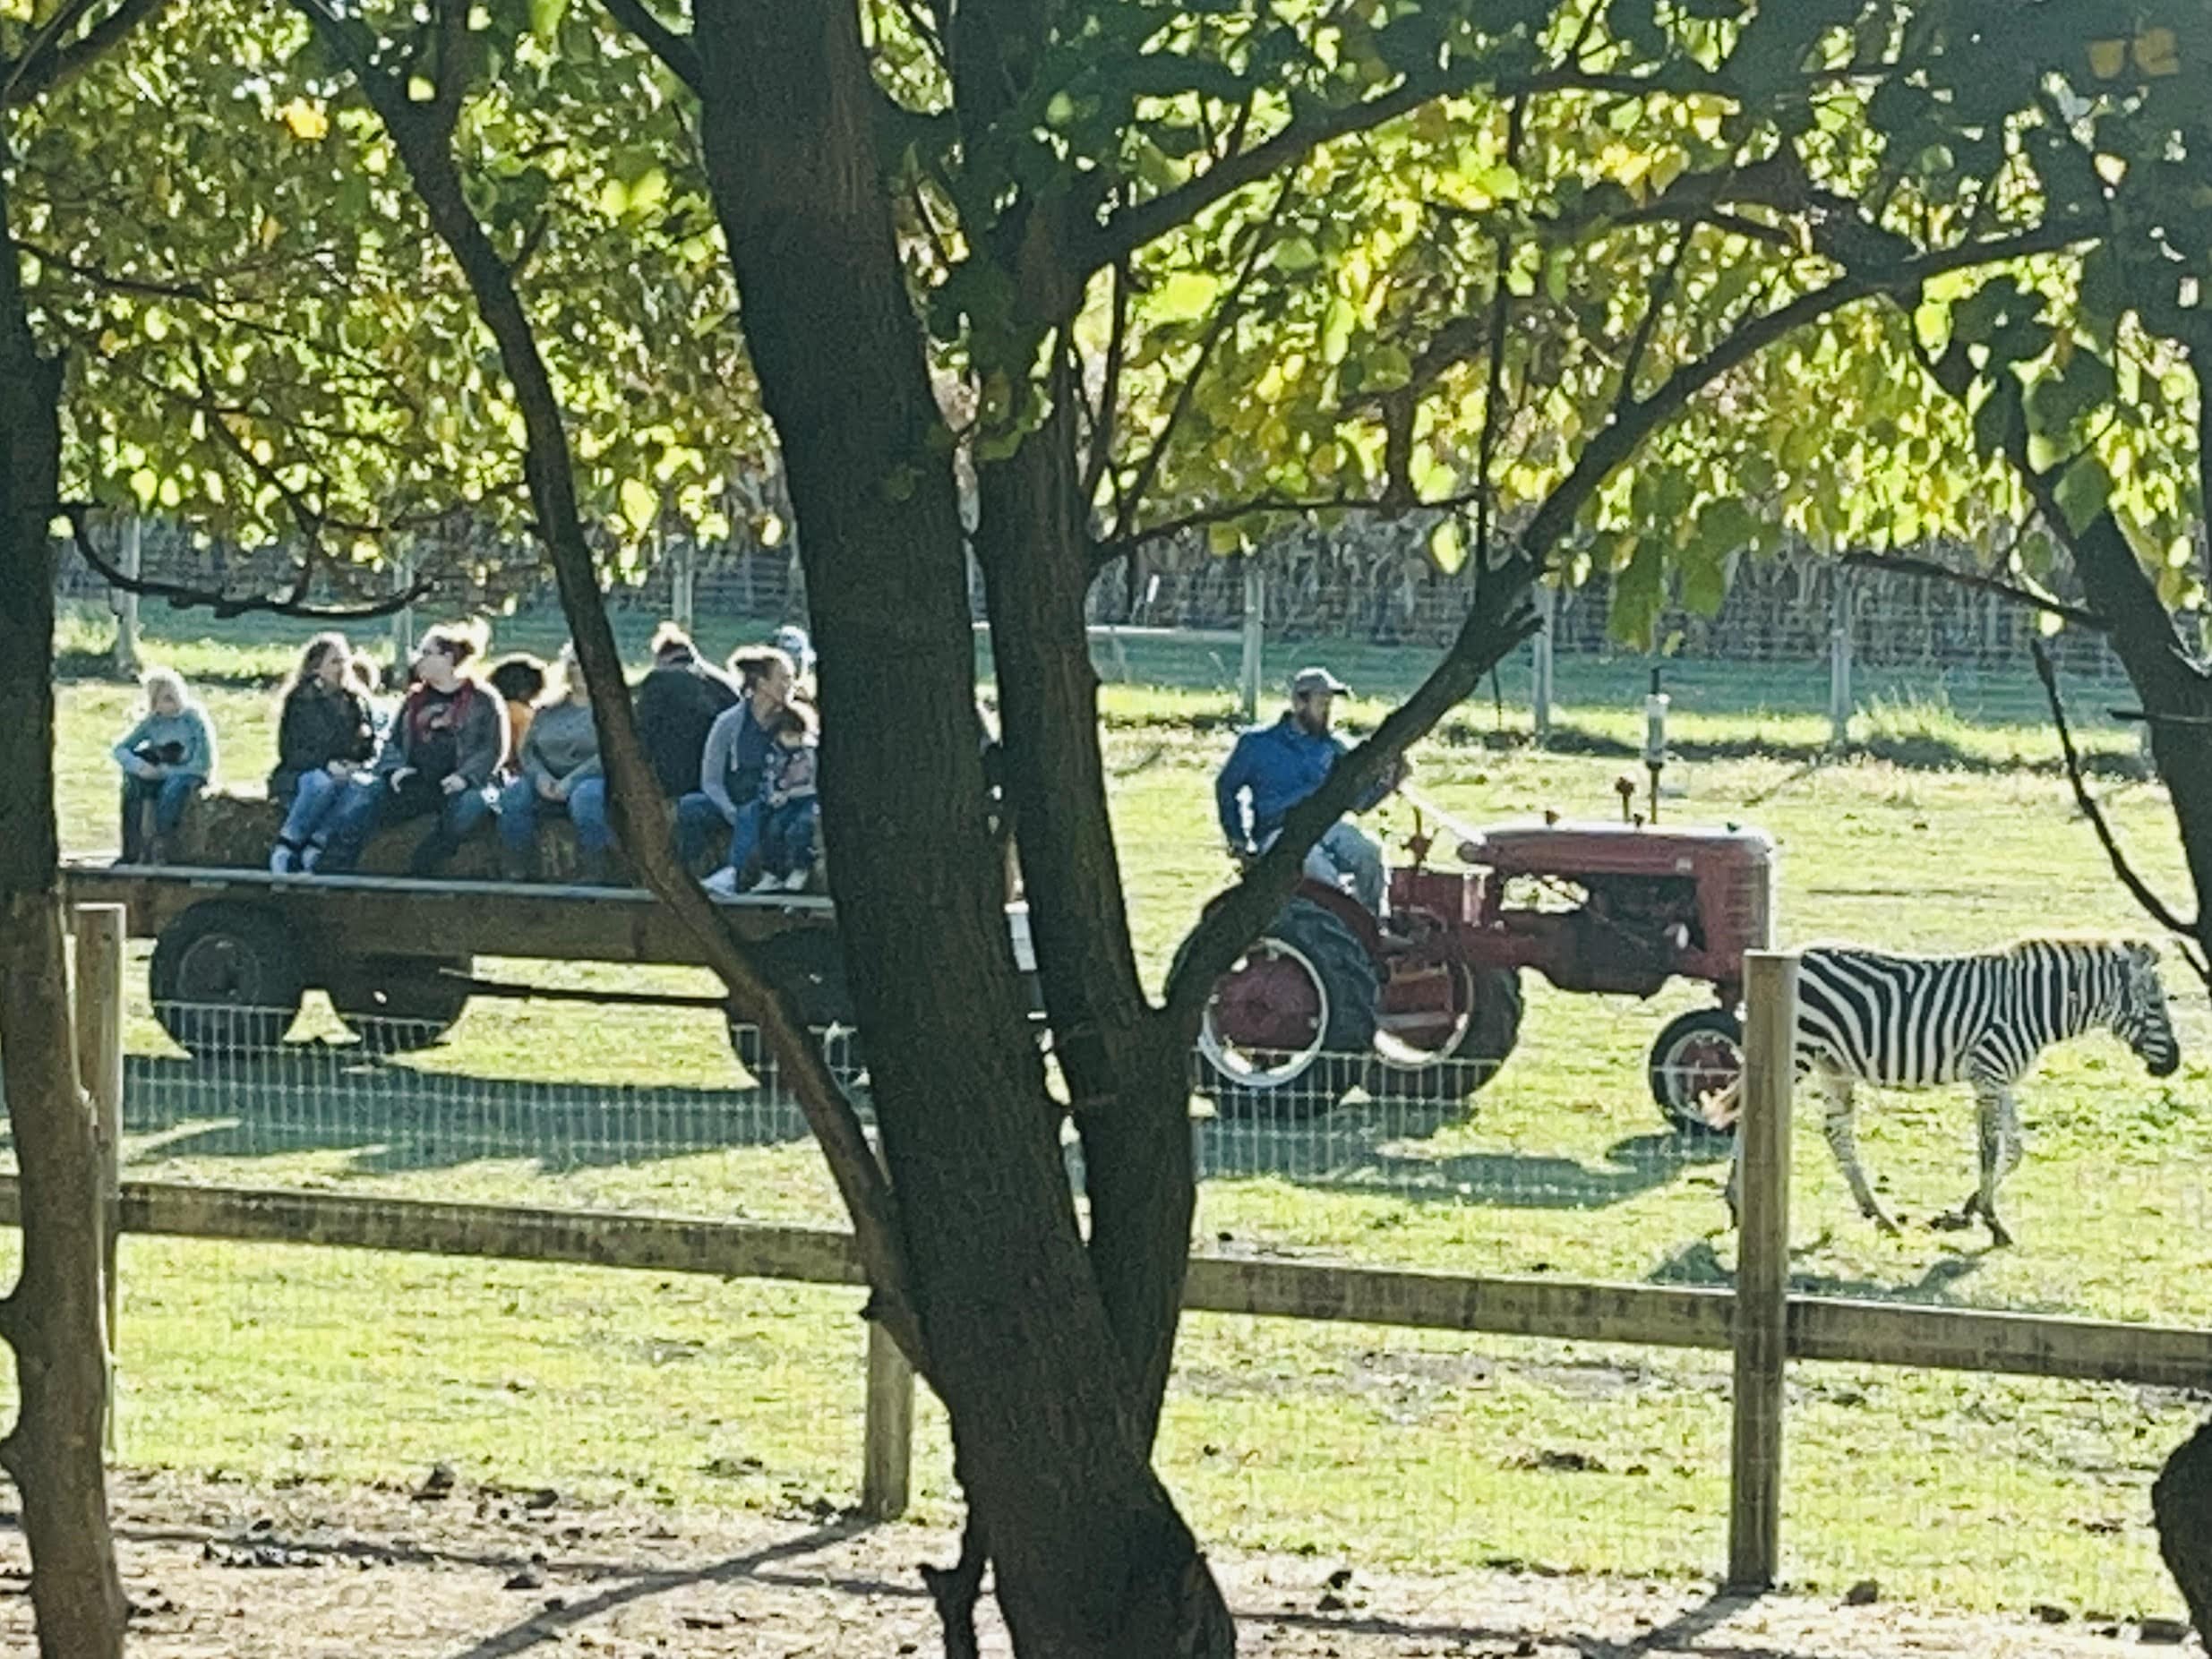 classic tractor
vintage tractor
antique tractor
tractor rides
tractor theme party
tractor party
Tractor train ride
Tractor hay ride
Tractor birthday
ohio